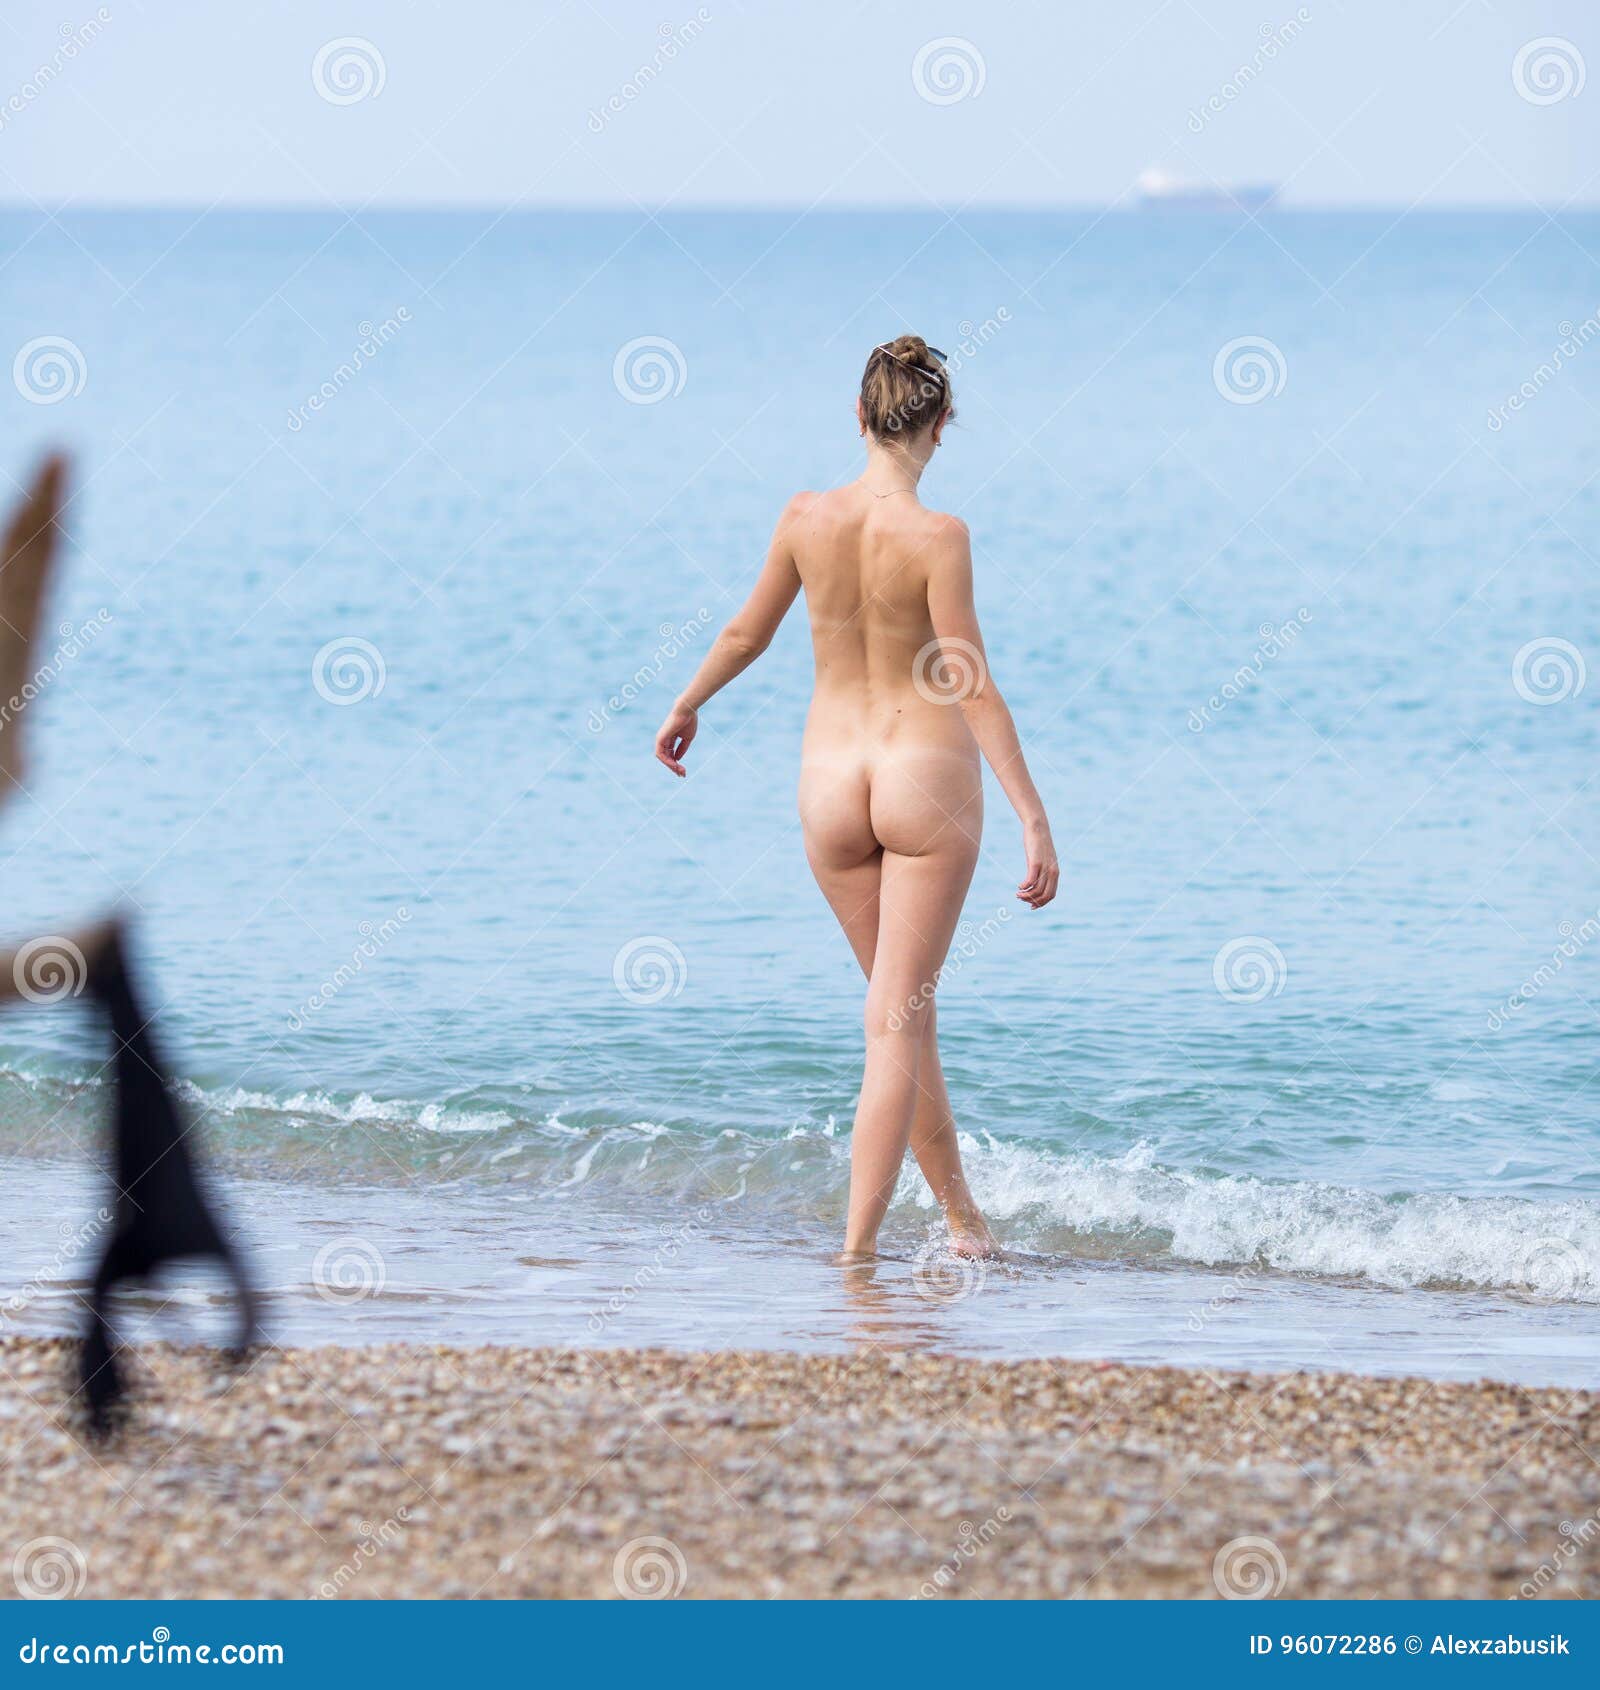 naked girls skinny dipping